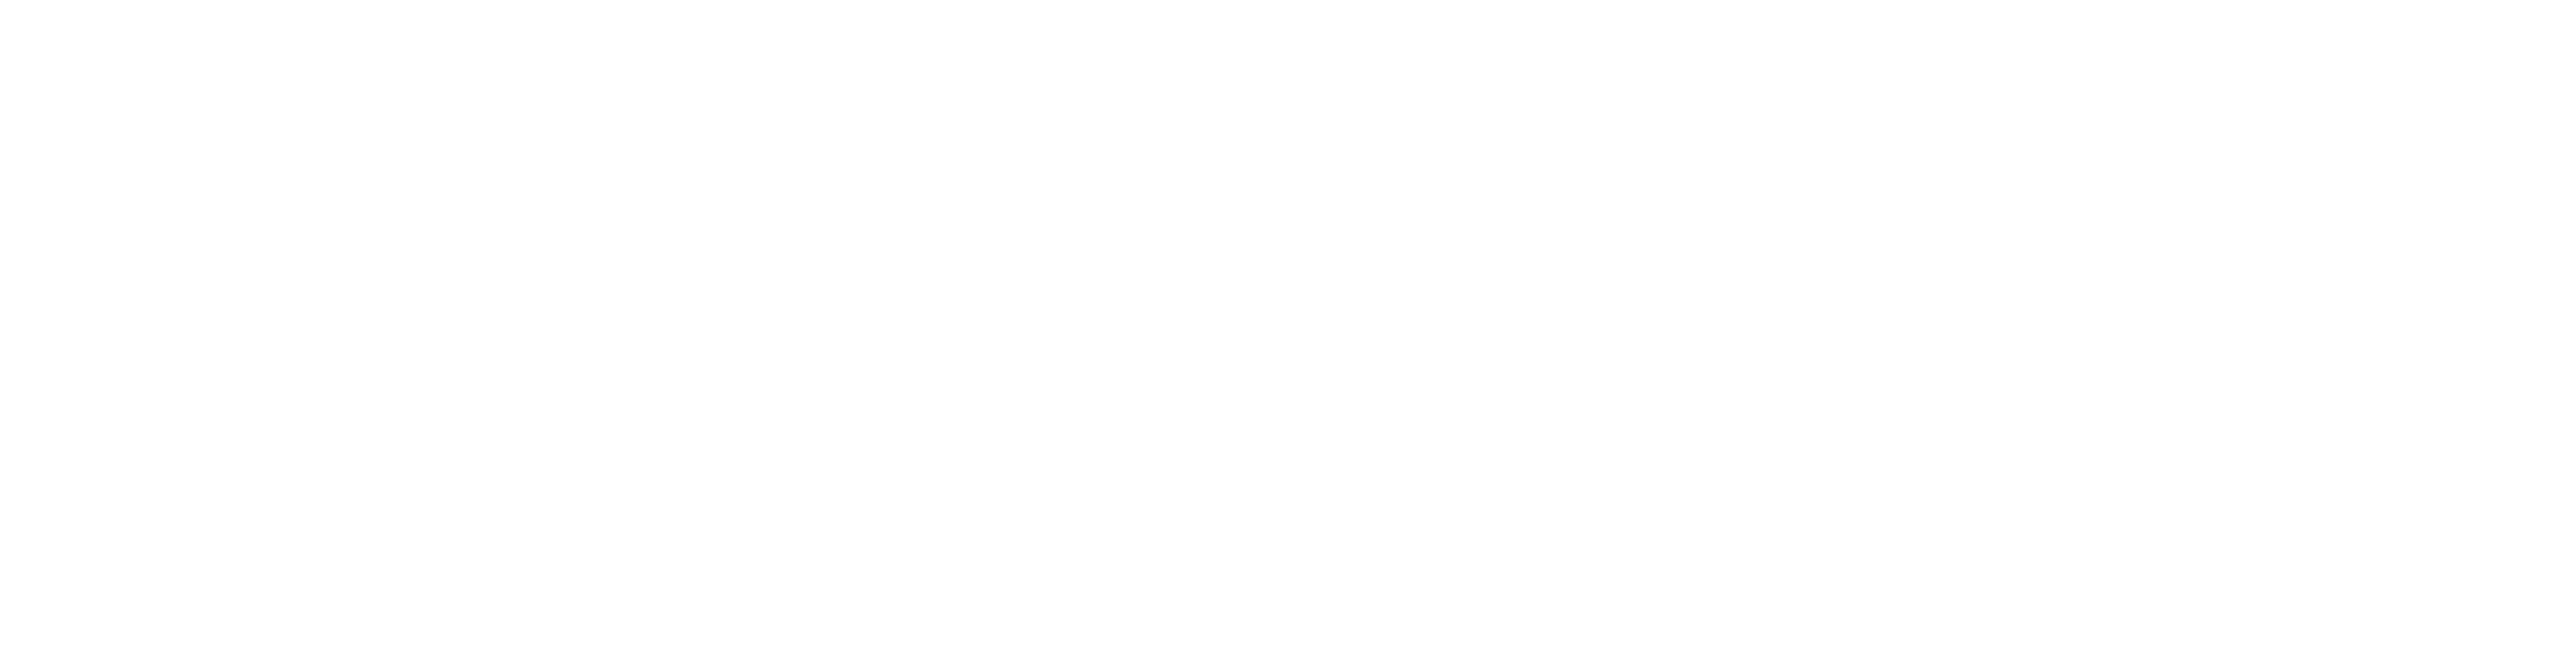 Terracotta Flooring Logo Large